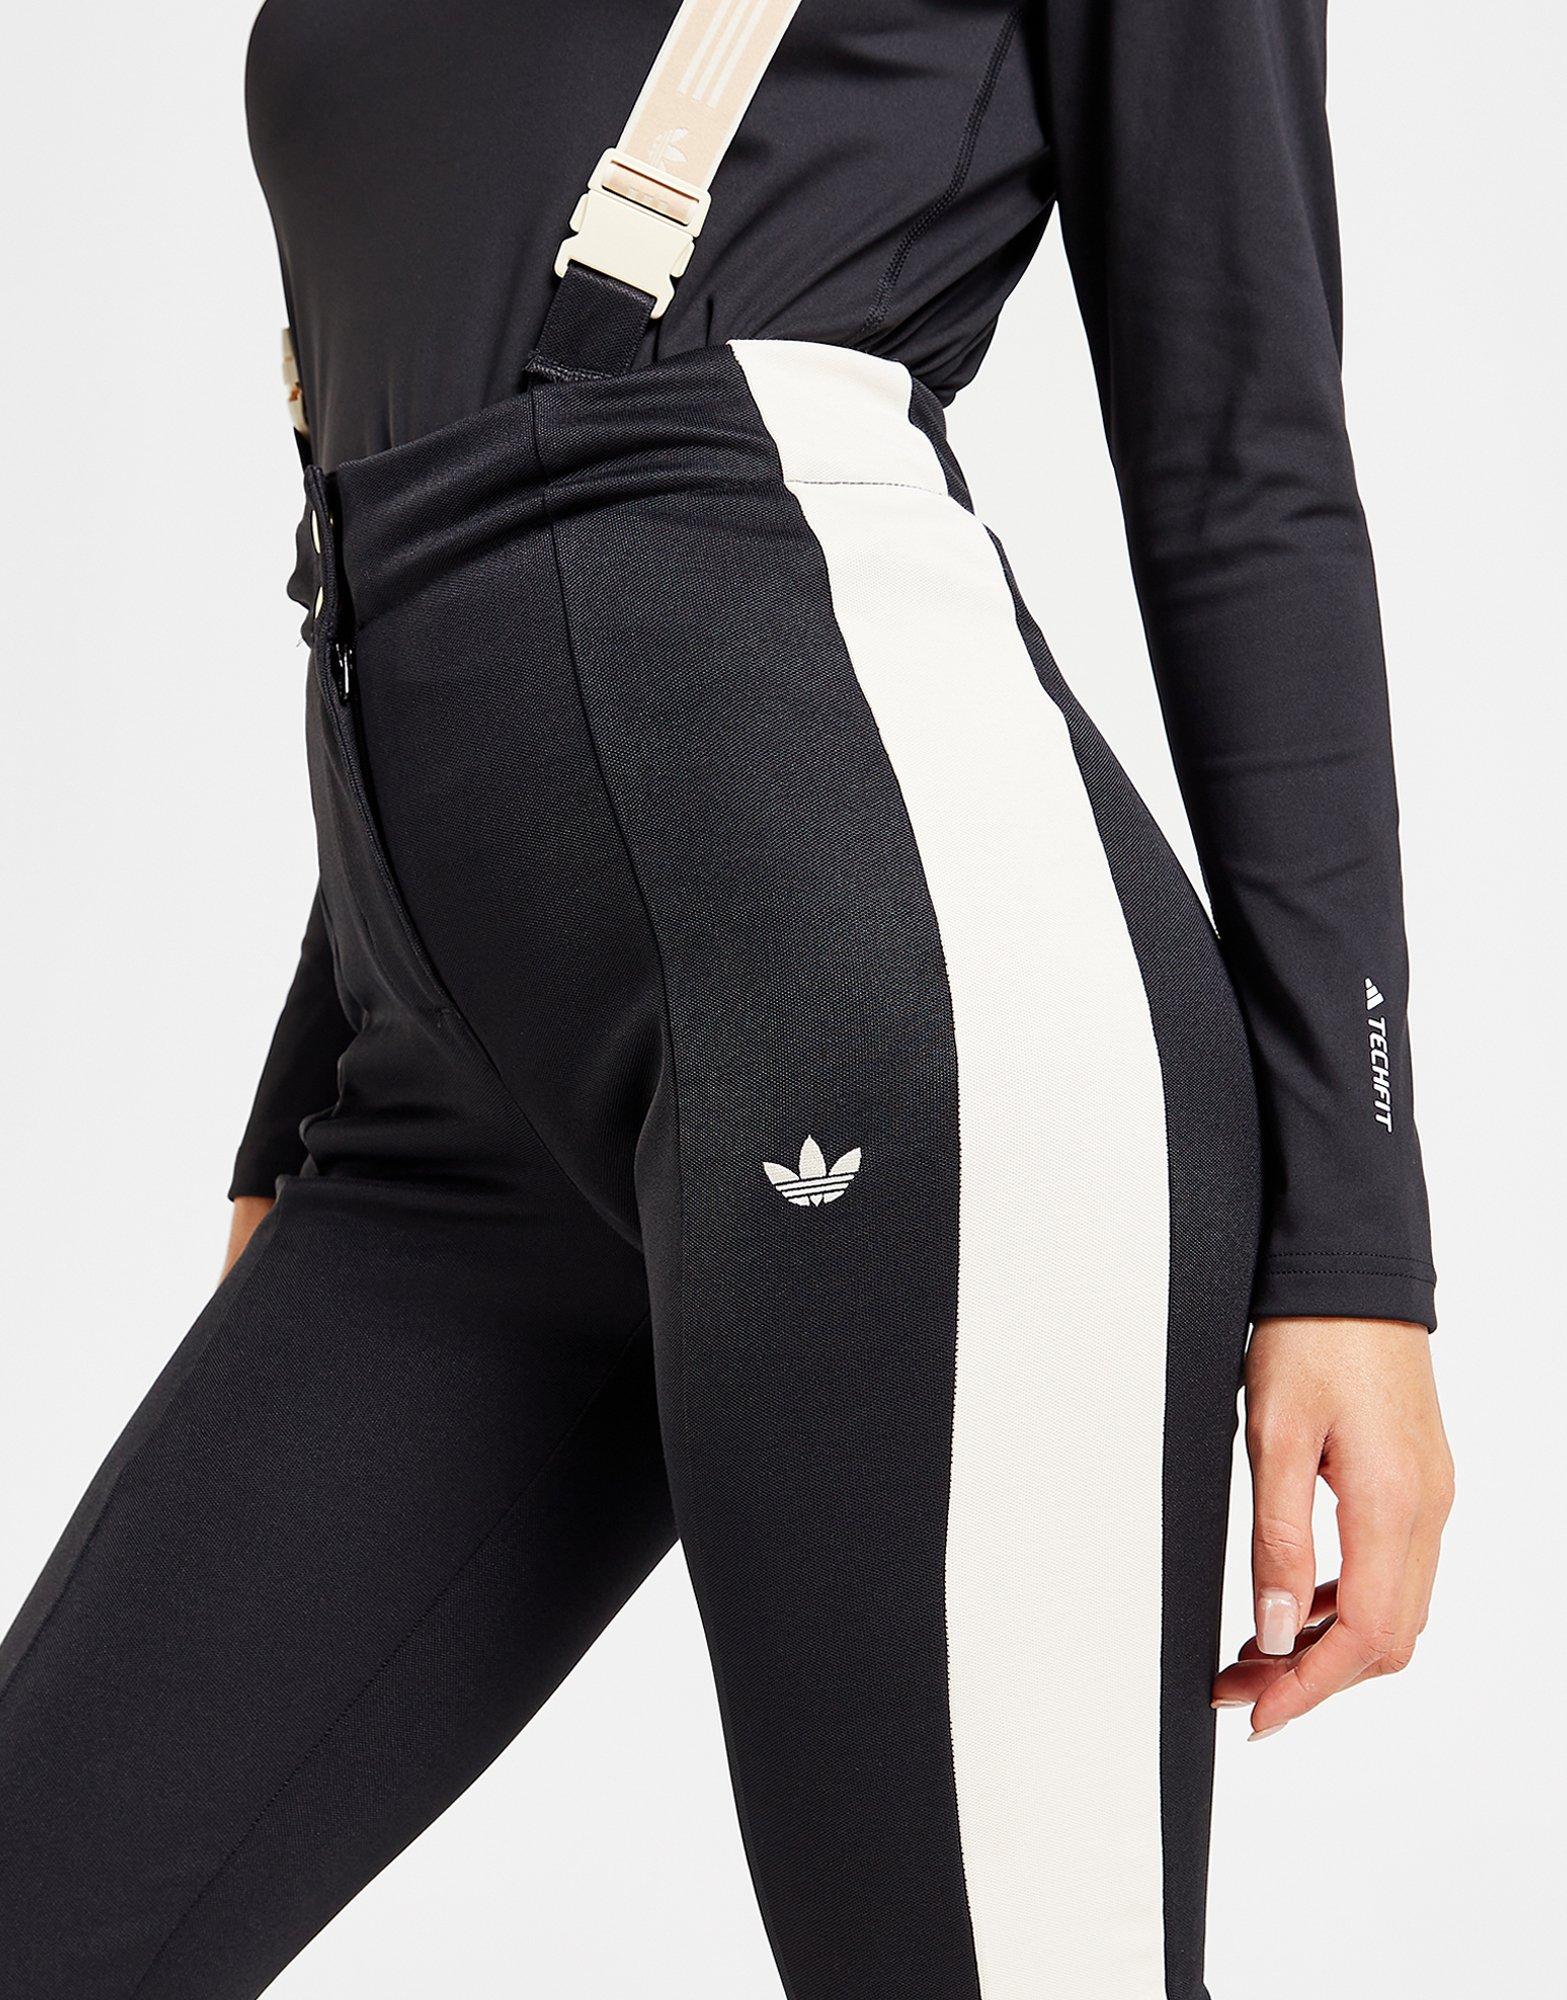 adidas Originals 'Ski Chic' ski pants in black